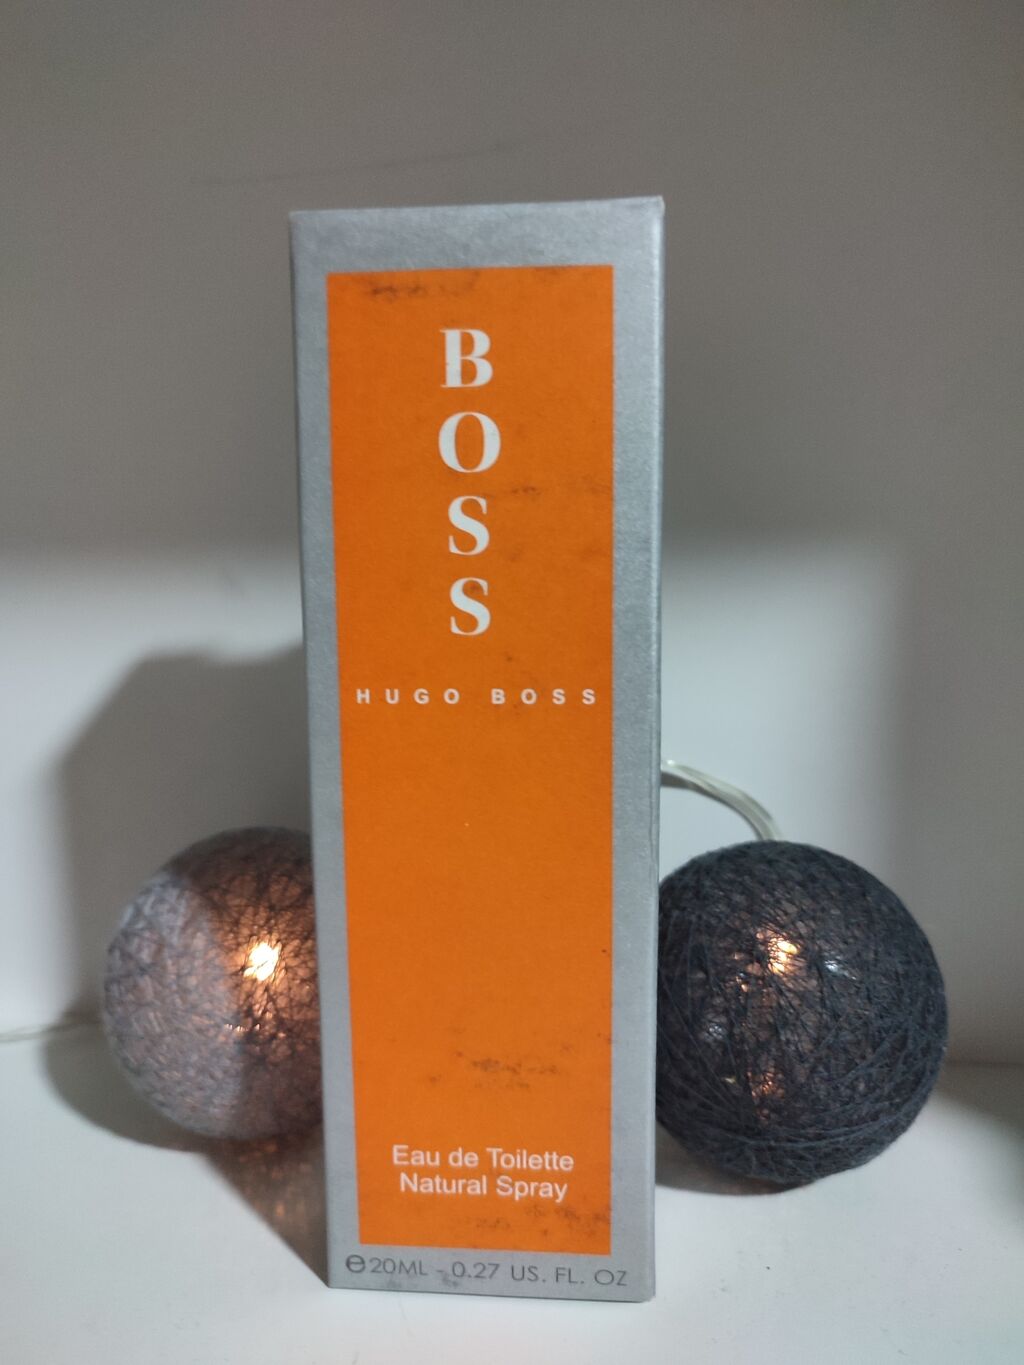 Parfemi: Hugo Boss Boss muški parfem 20 ml
Odličan kvalitet i trajnost parfema — 1